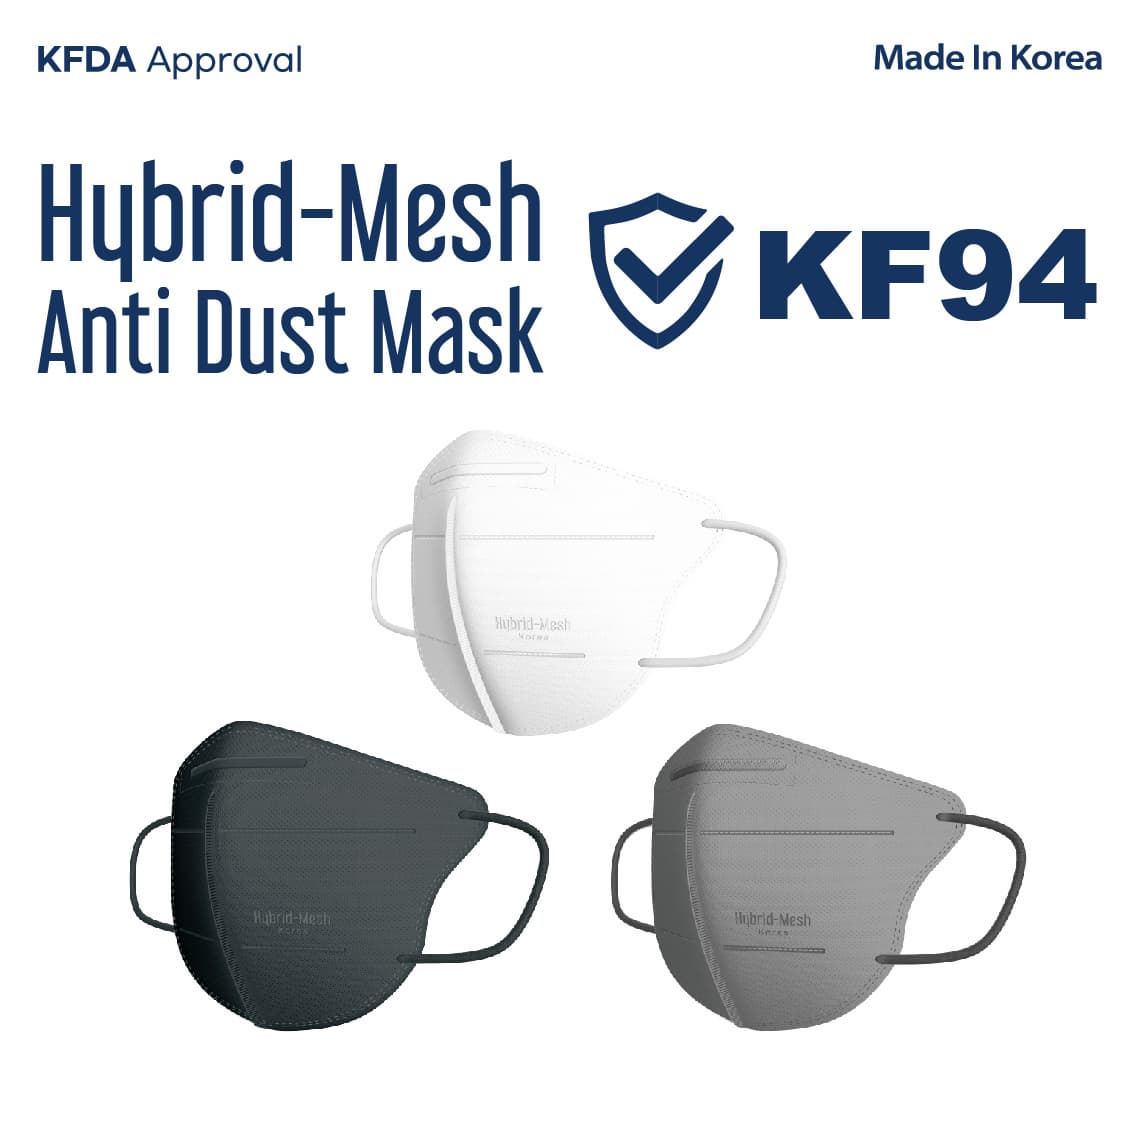 Hybrid_Mesh Anti Dust Mask _KF94_